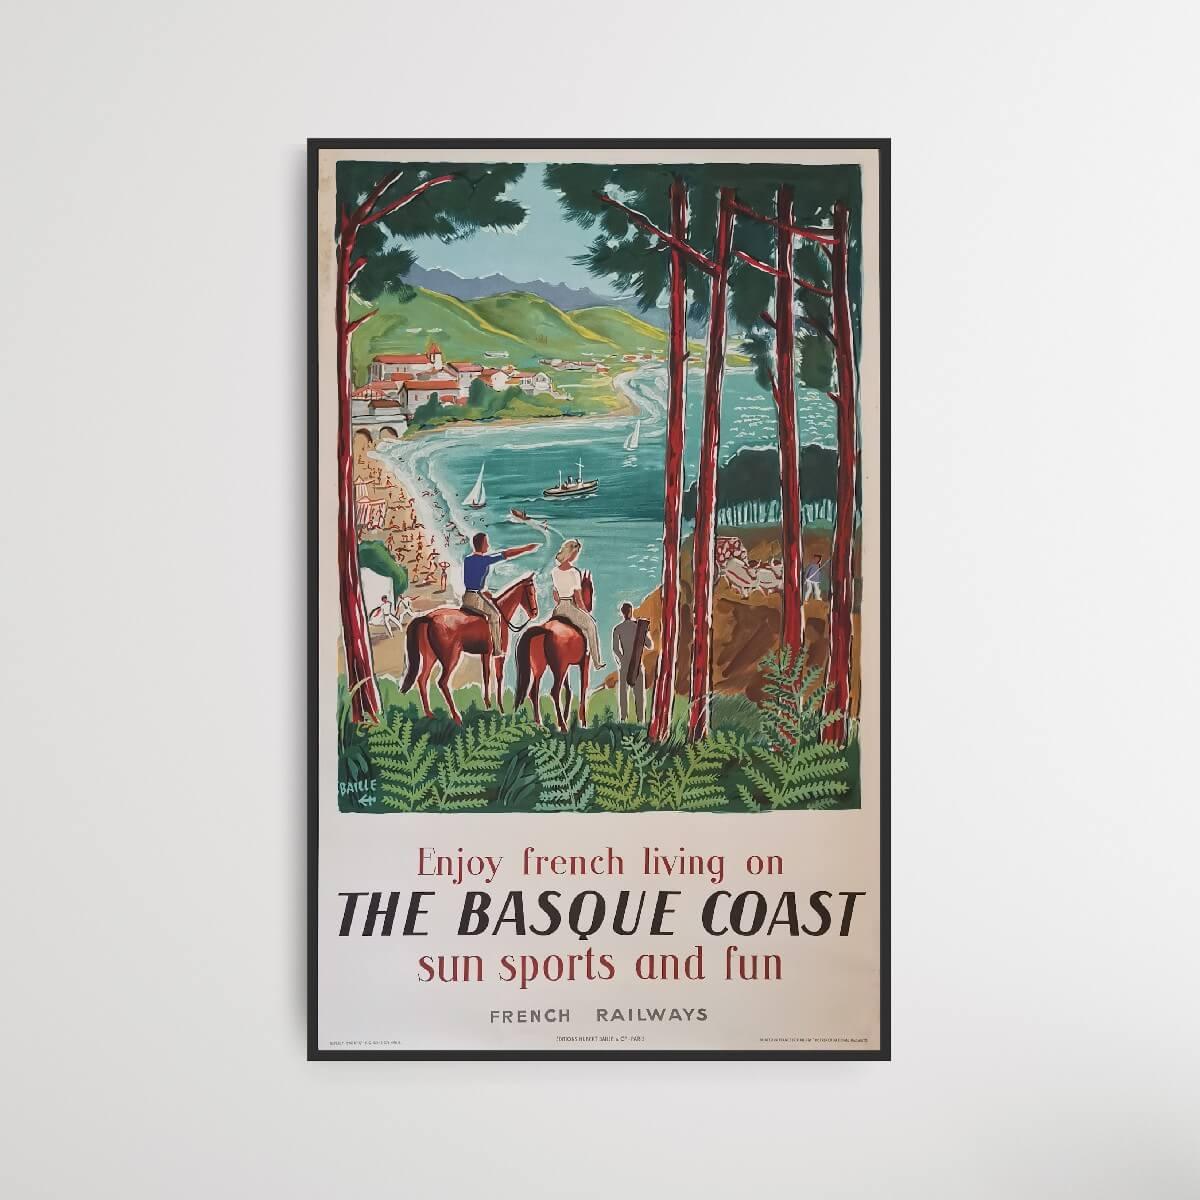 The Basque Coast